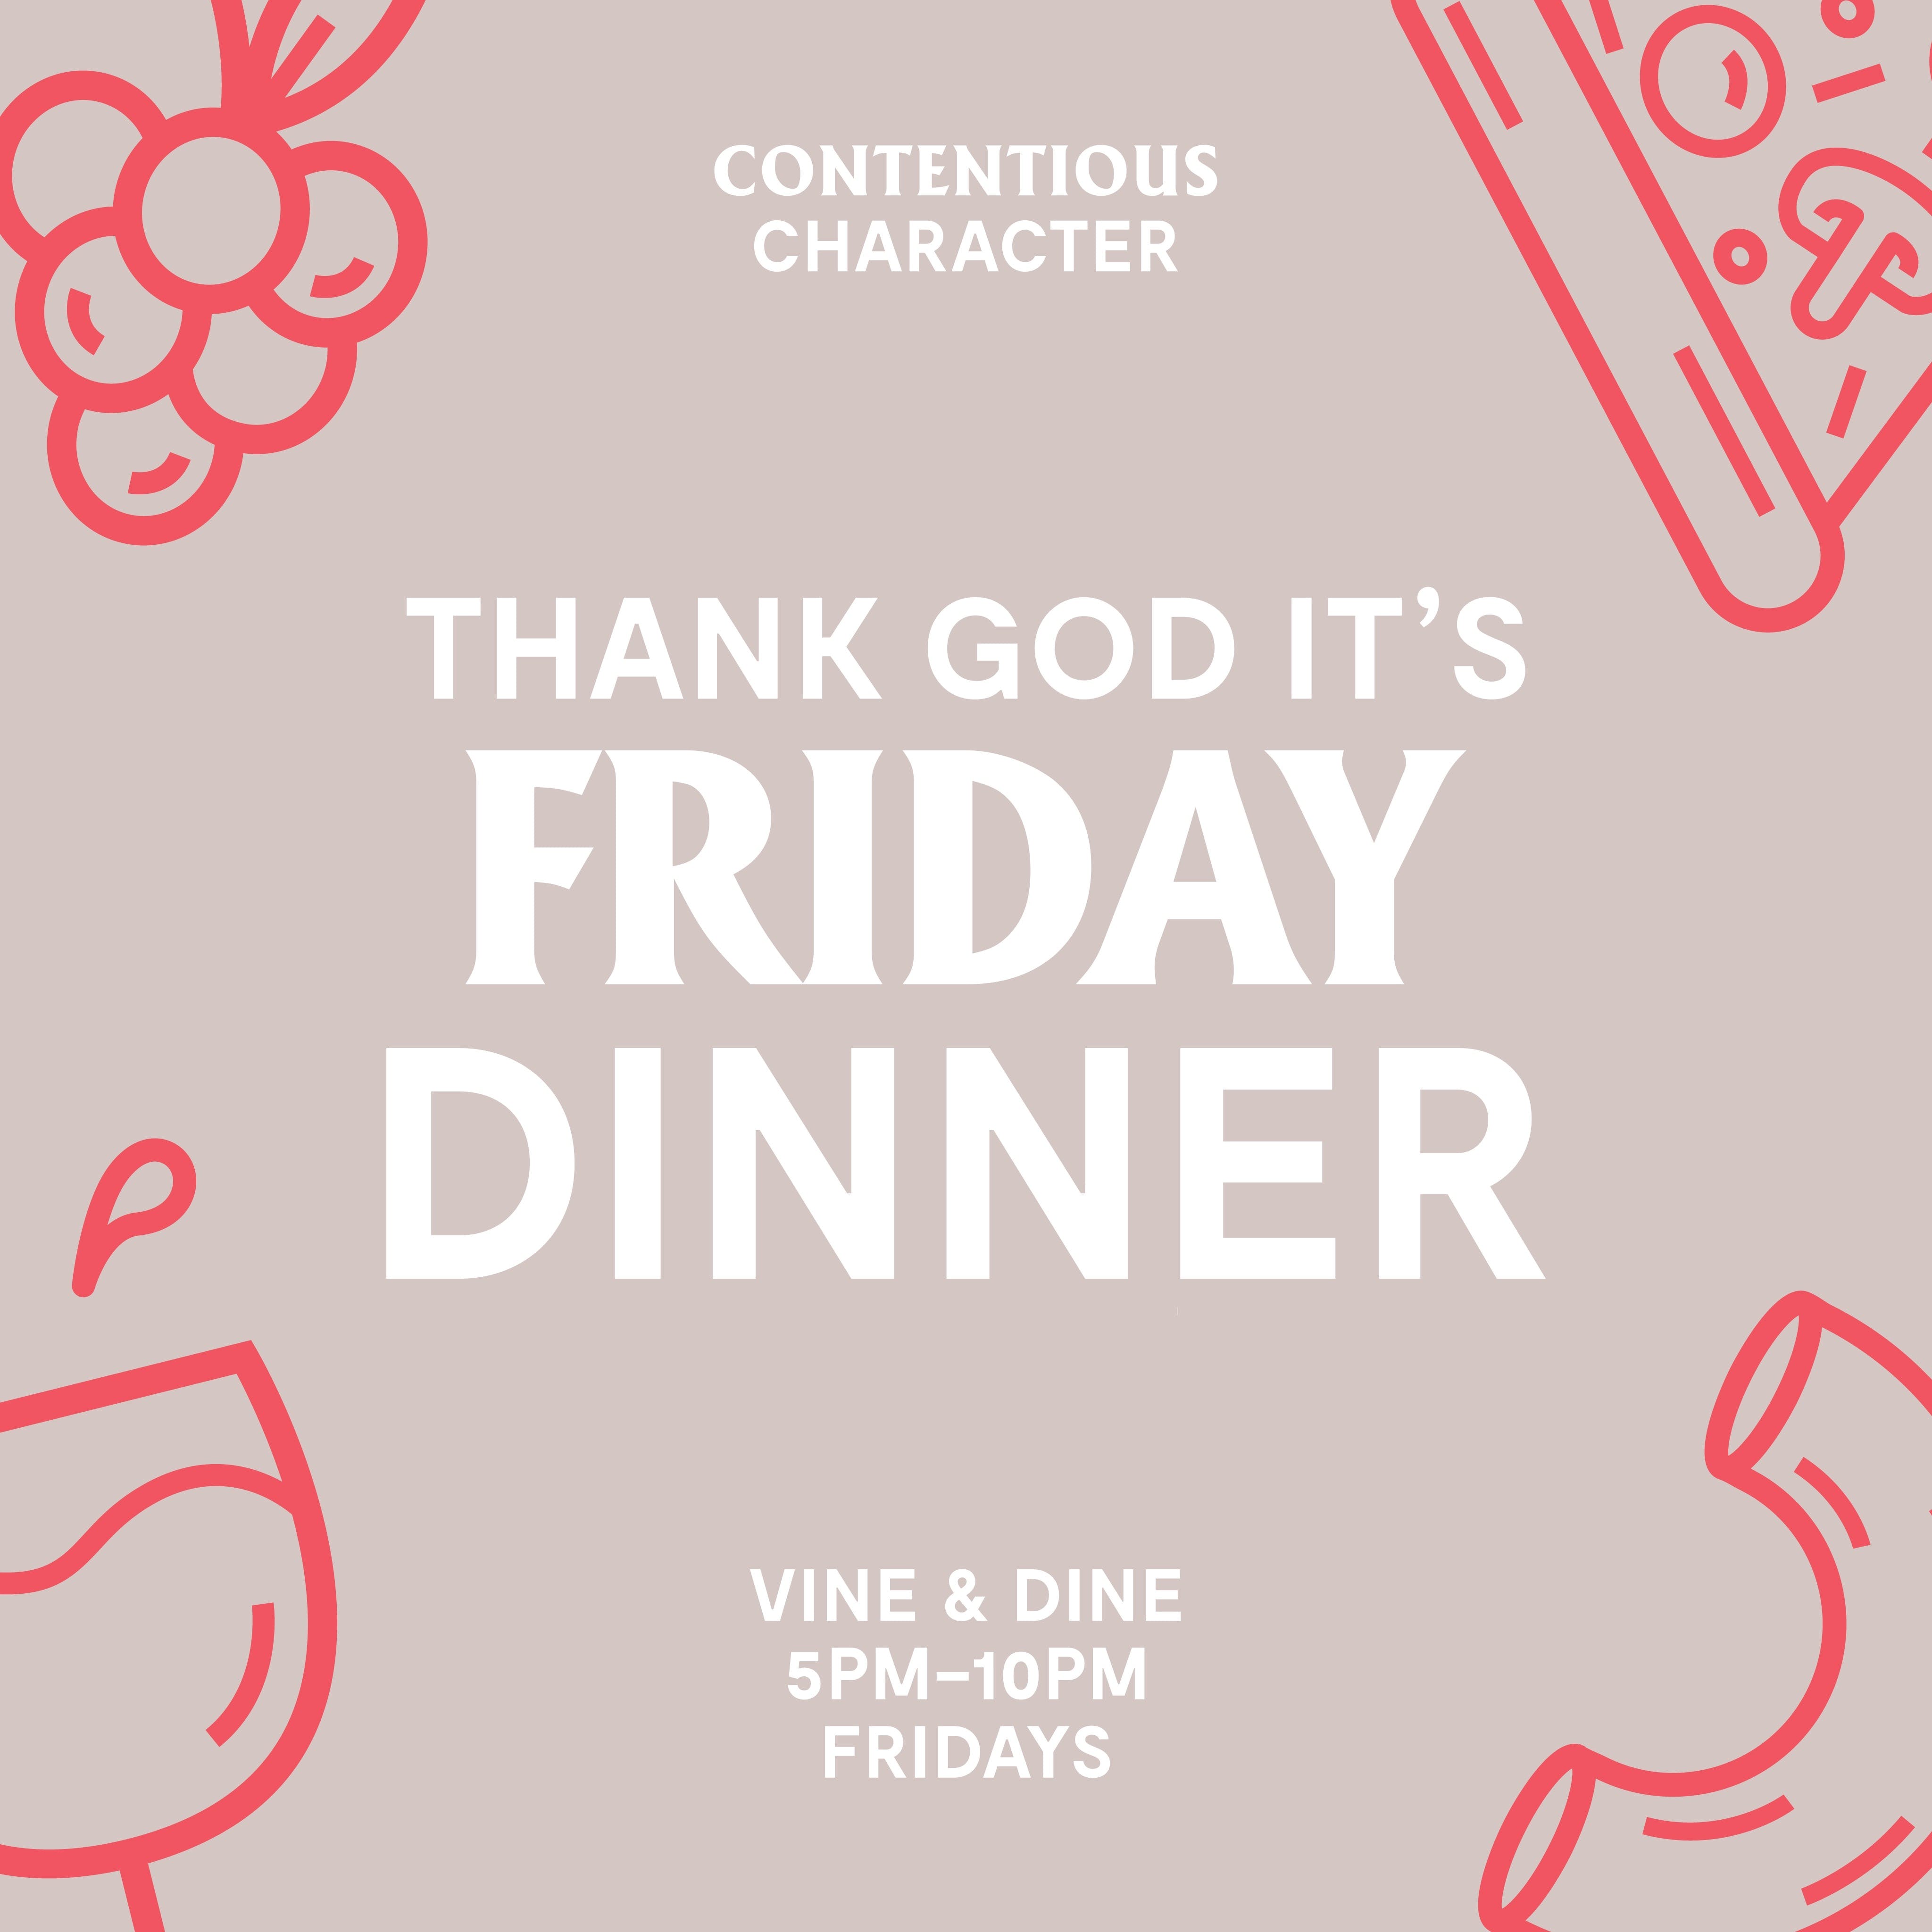 Thank God It's Friday Dinner - Vine and Dine